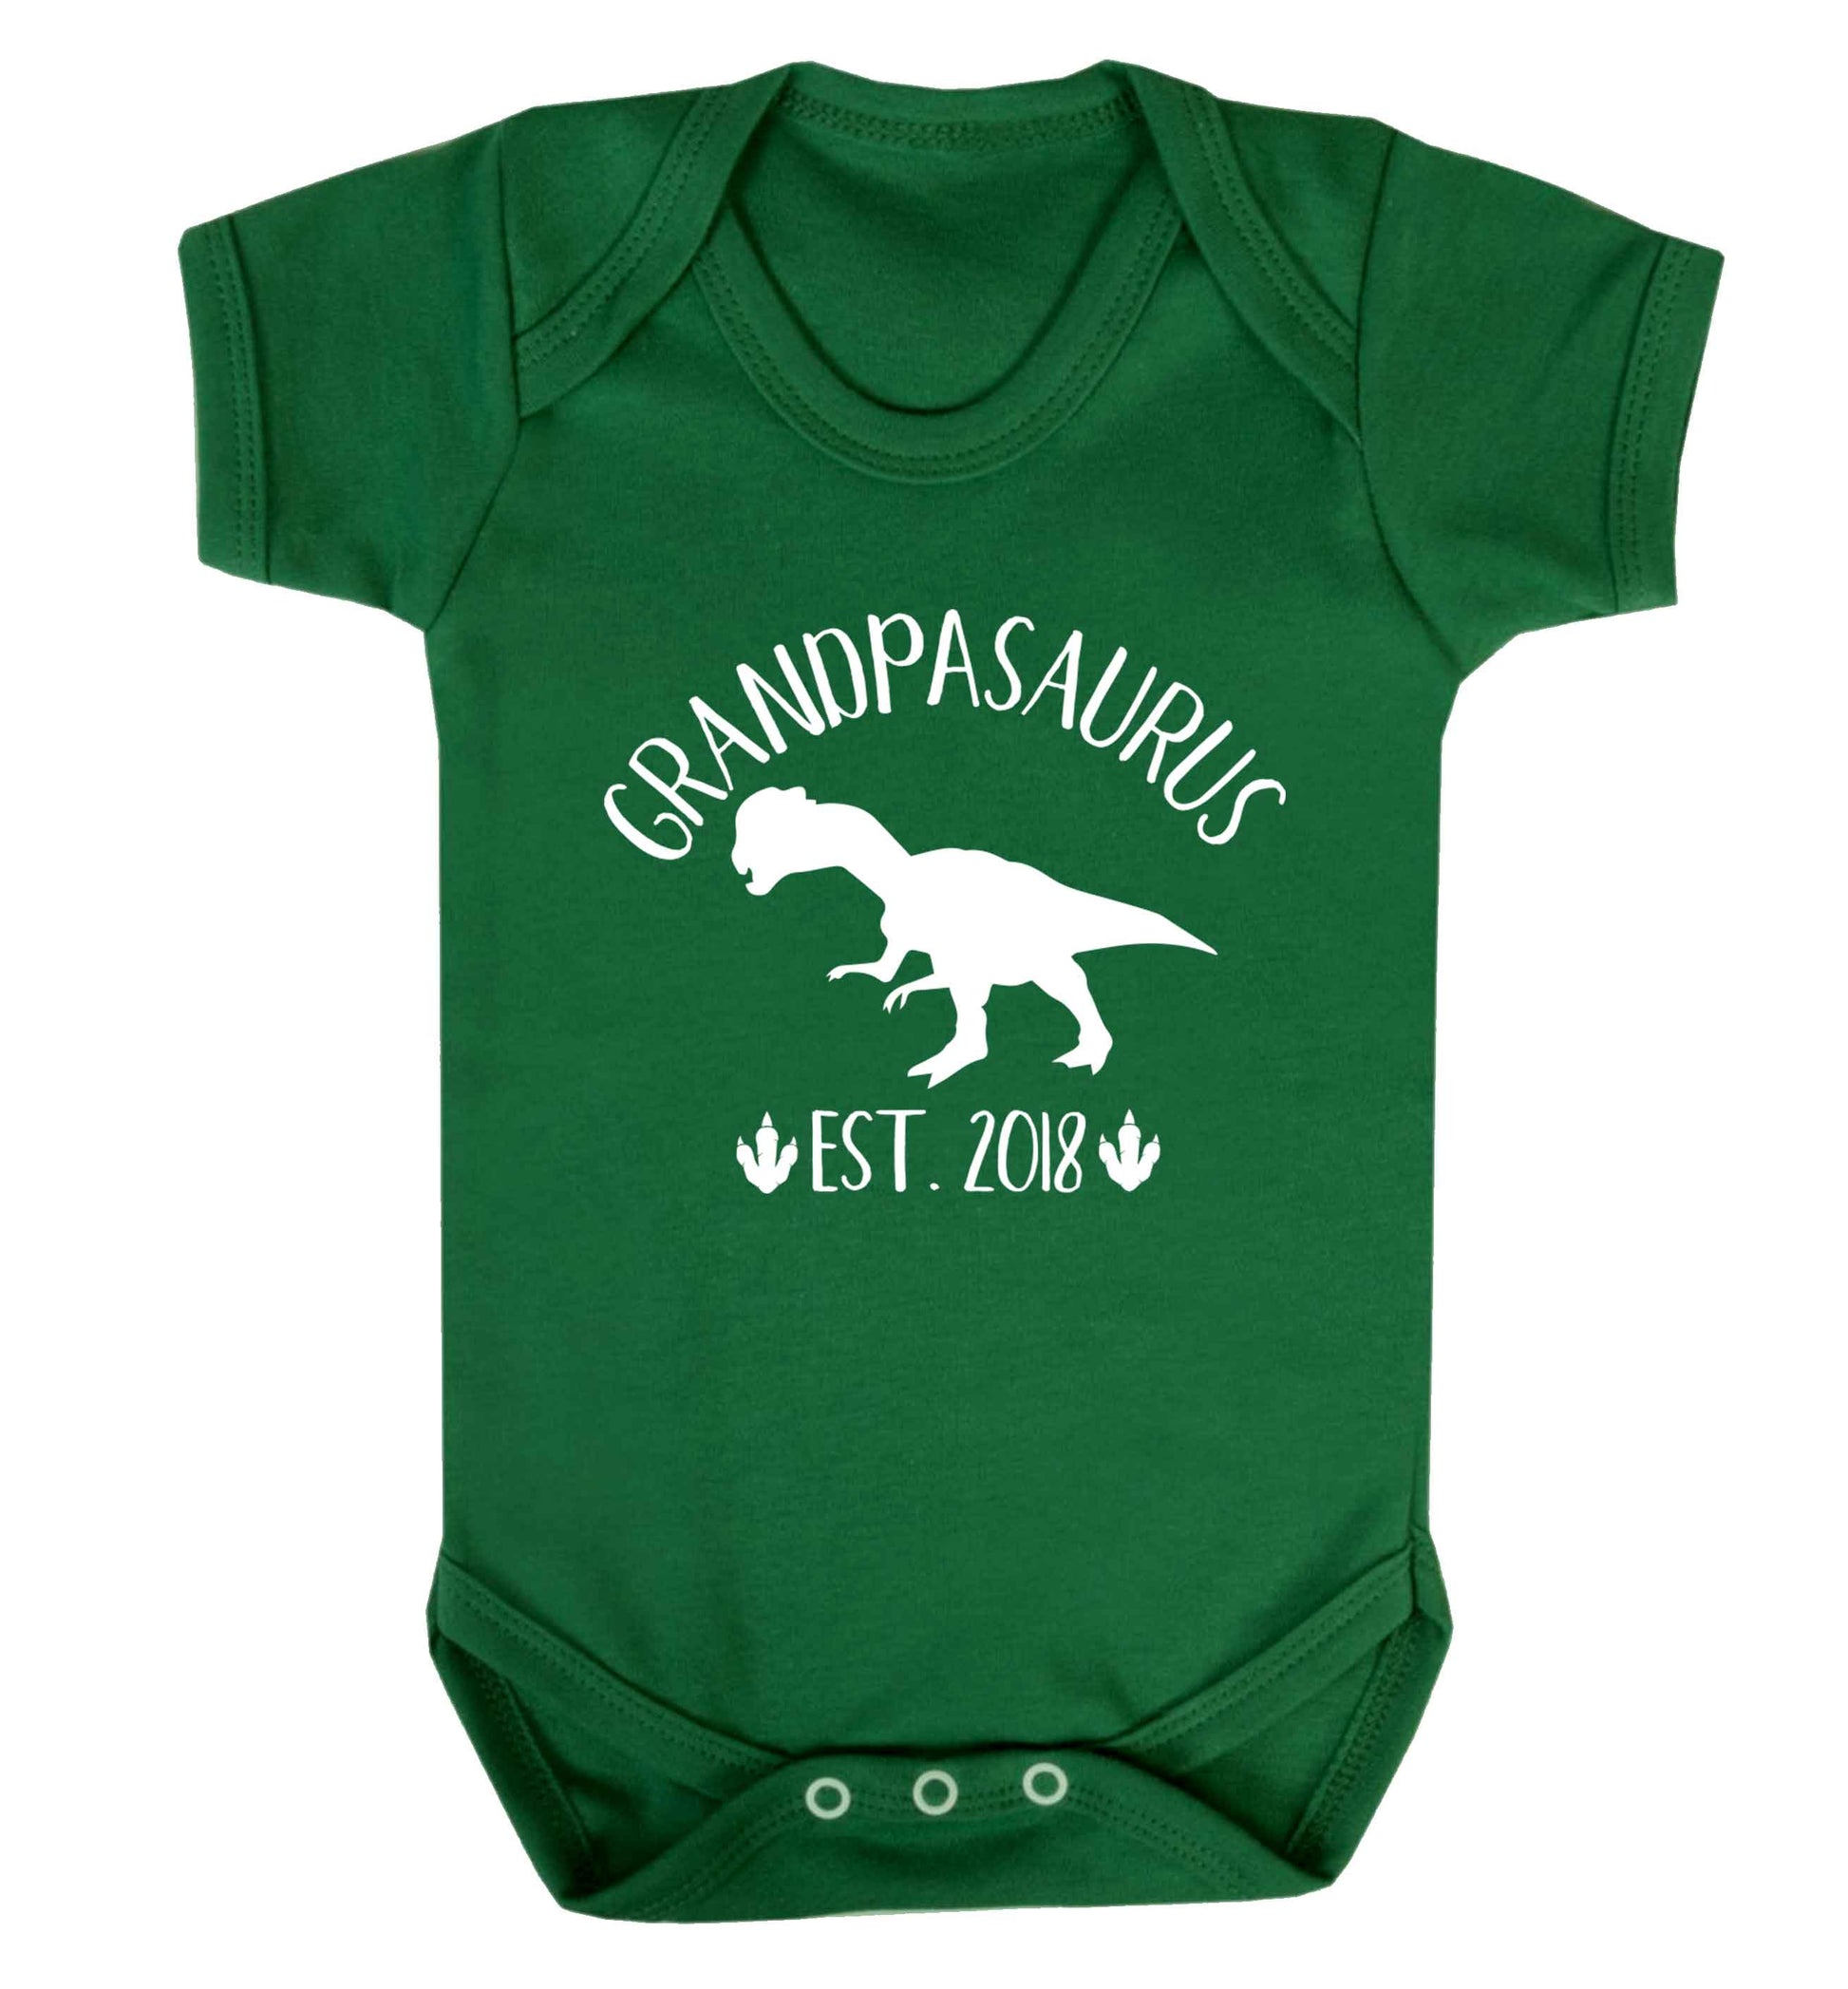 Personalised grandpasaurus since (custom date) Baby Vest green 18-24 months